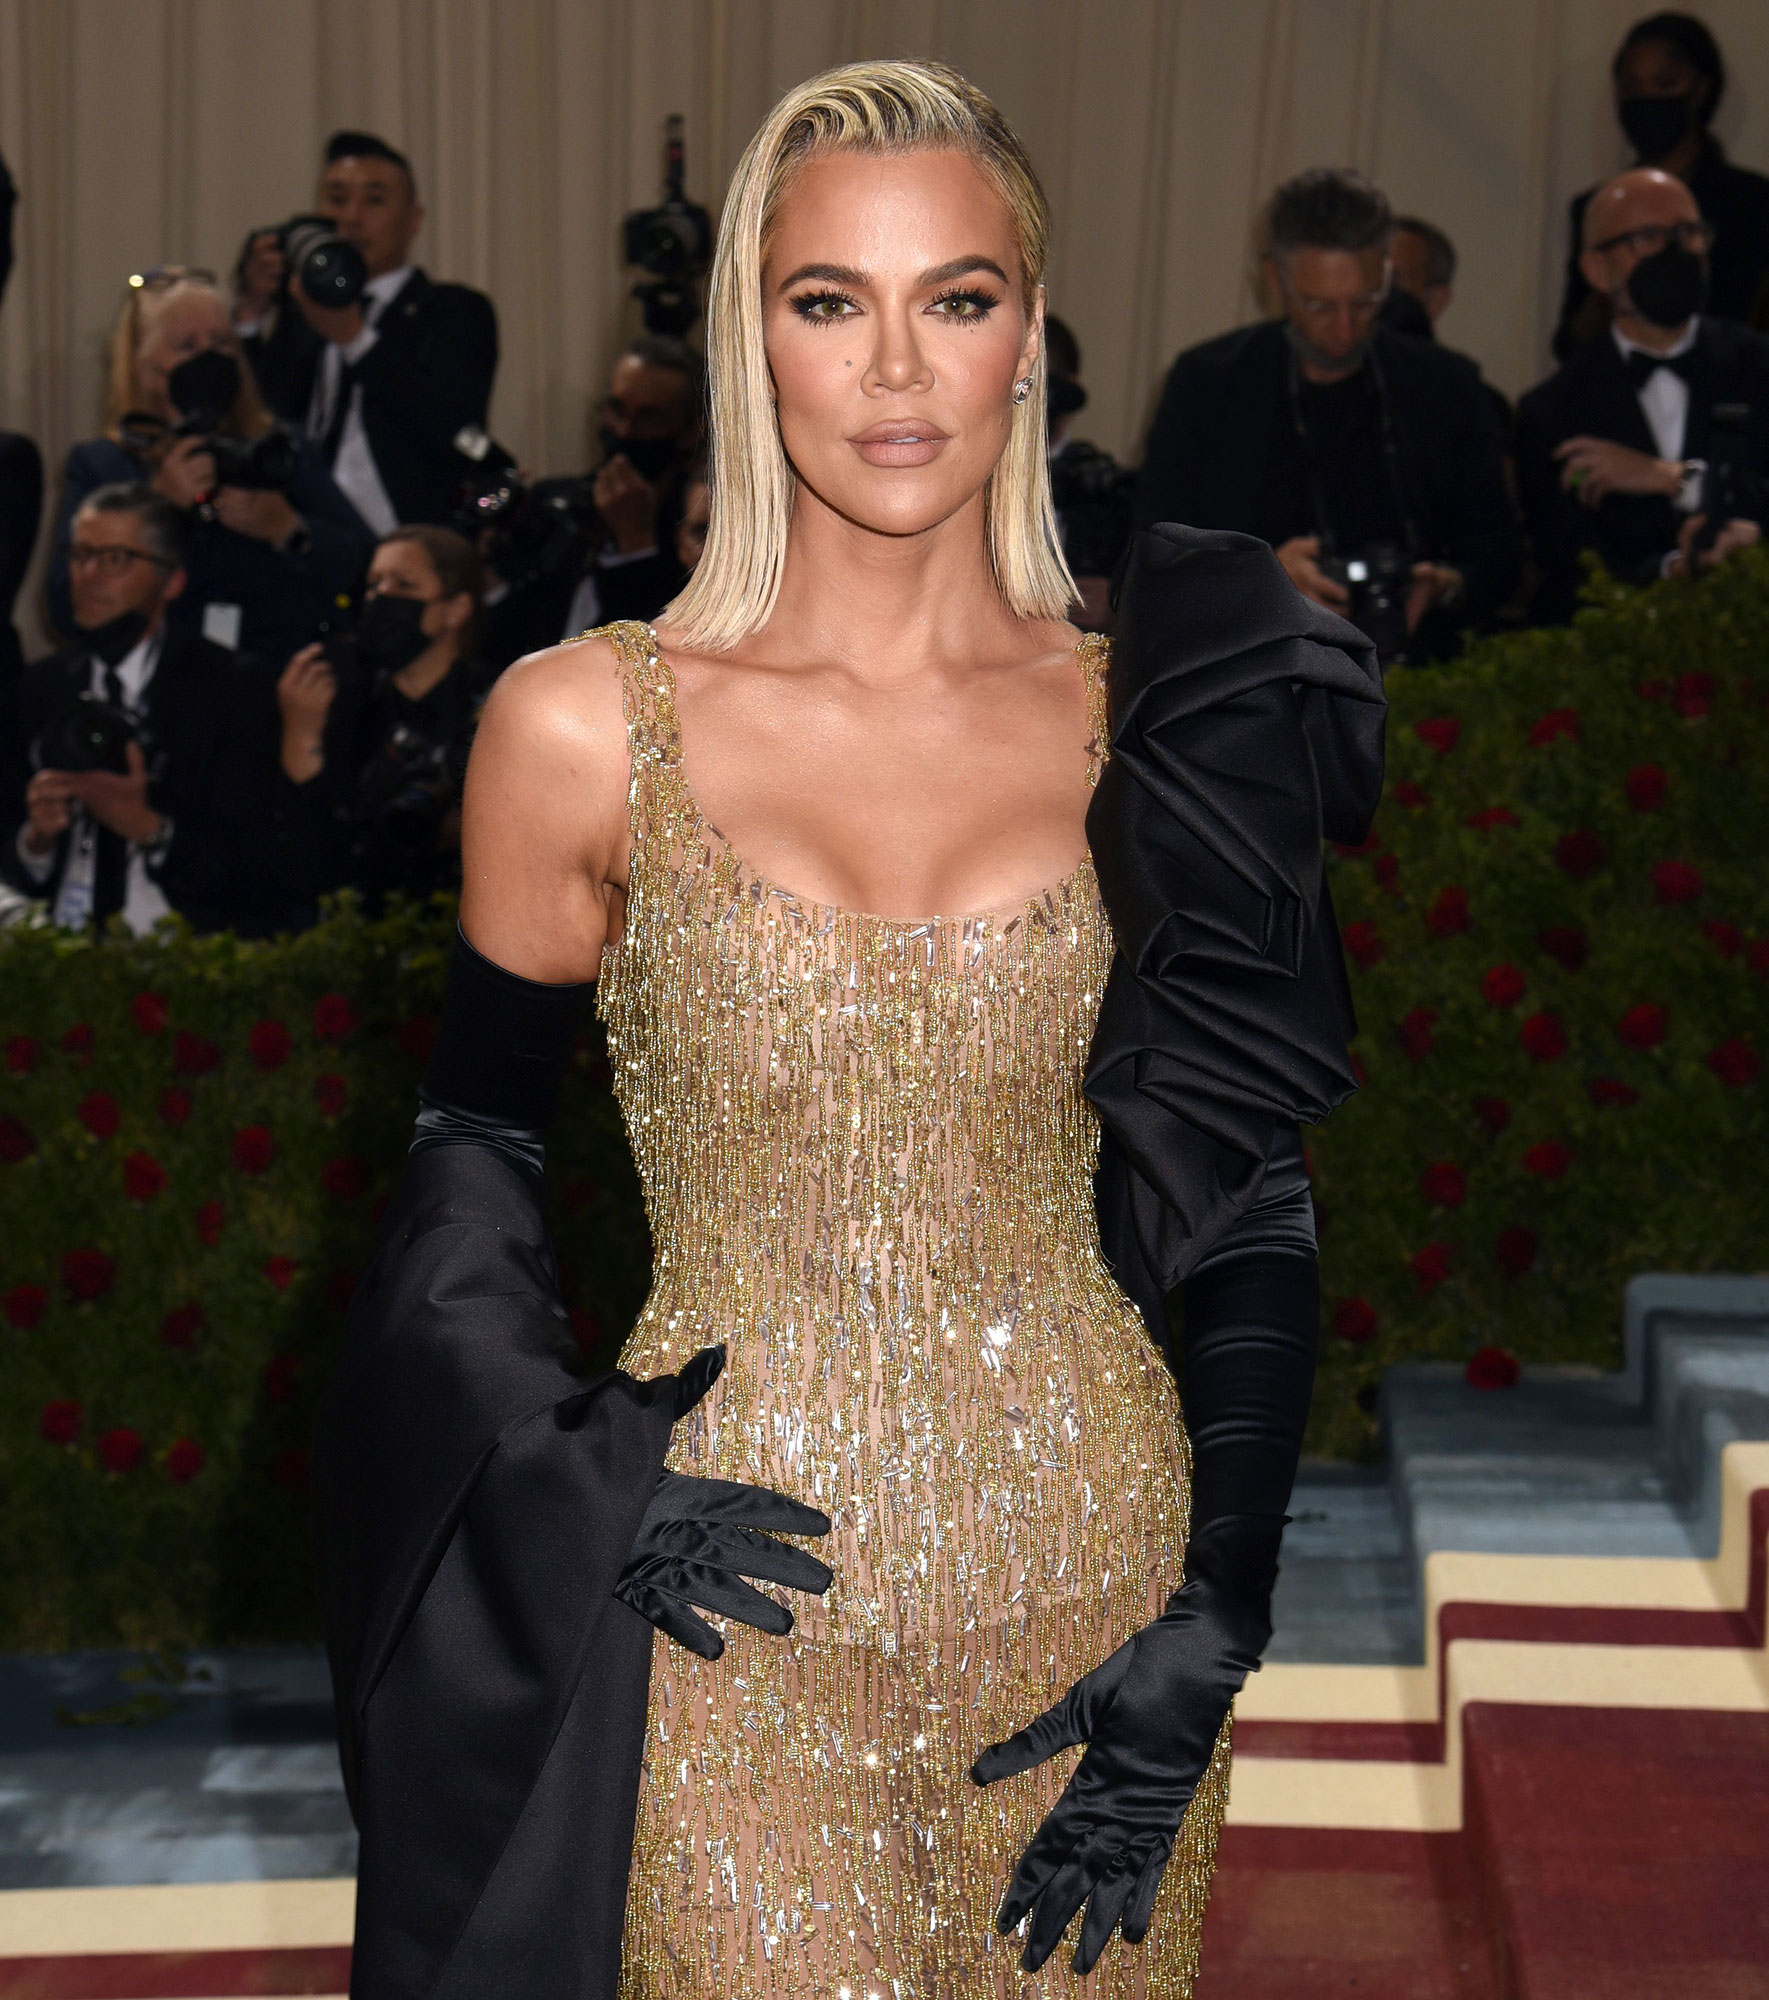 Khloé Kardashian reflects on her body transformation ahead of new show  Revenge Body